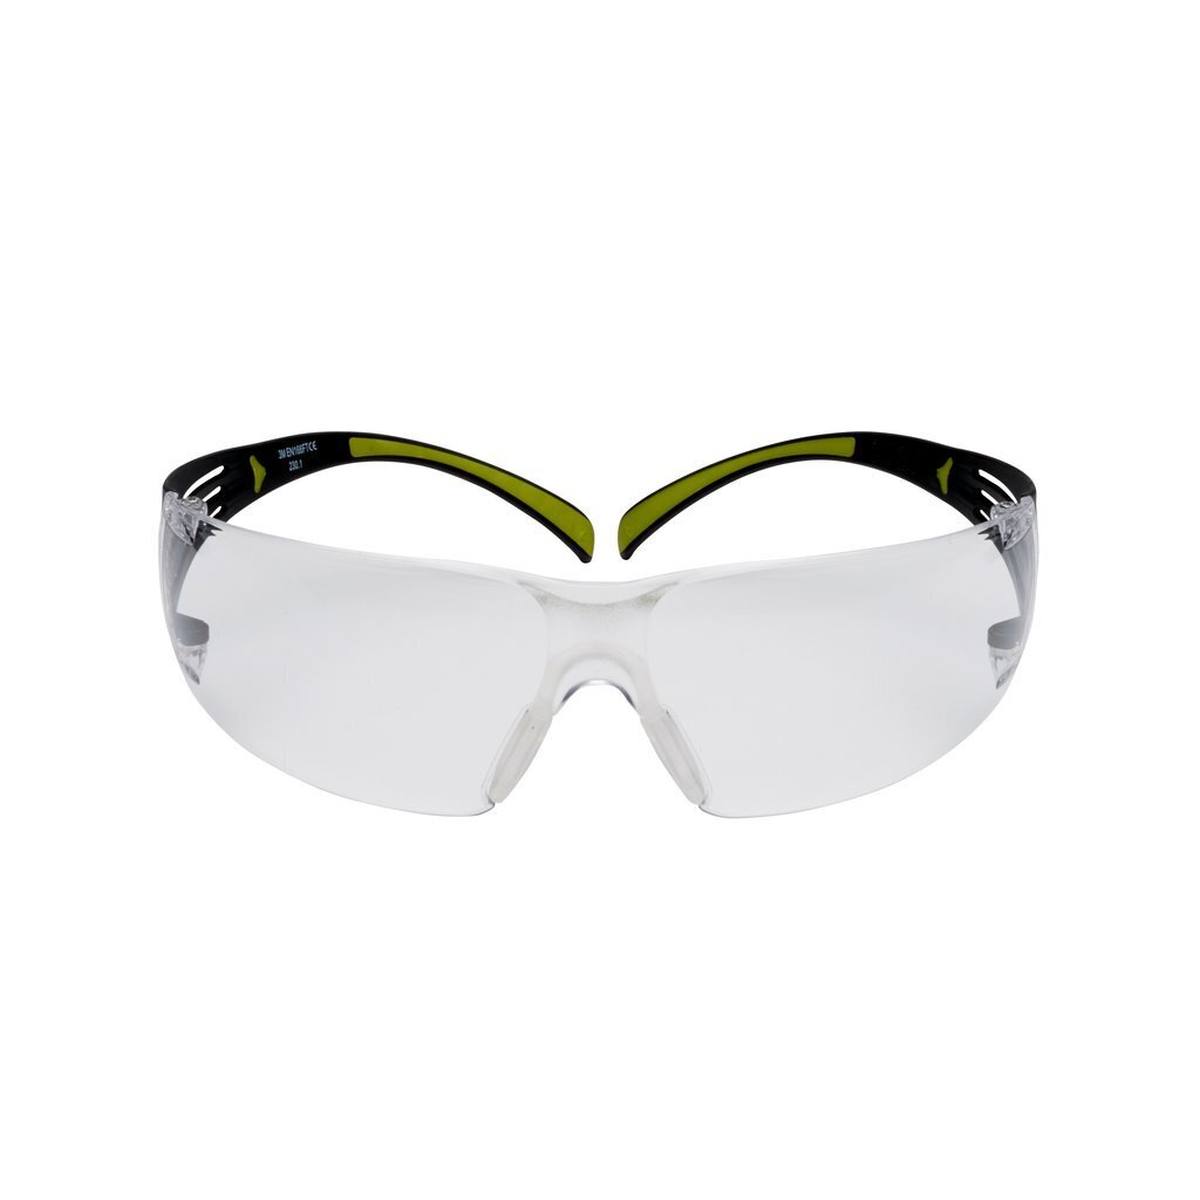 3M SecureFit 400 Schutzbrille, schwarz/grüne Bügel, Antikratz-/Anti-Fog-Beschichtung, transparente Scheibe, SF401AS/AF-EU